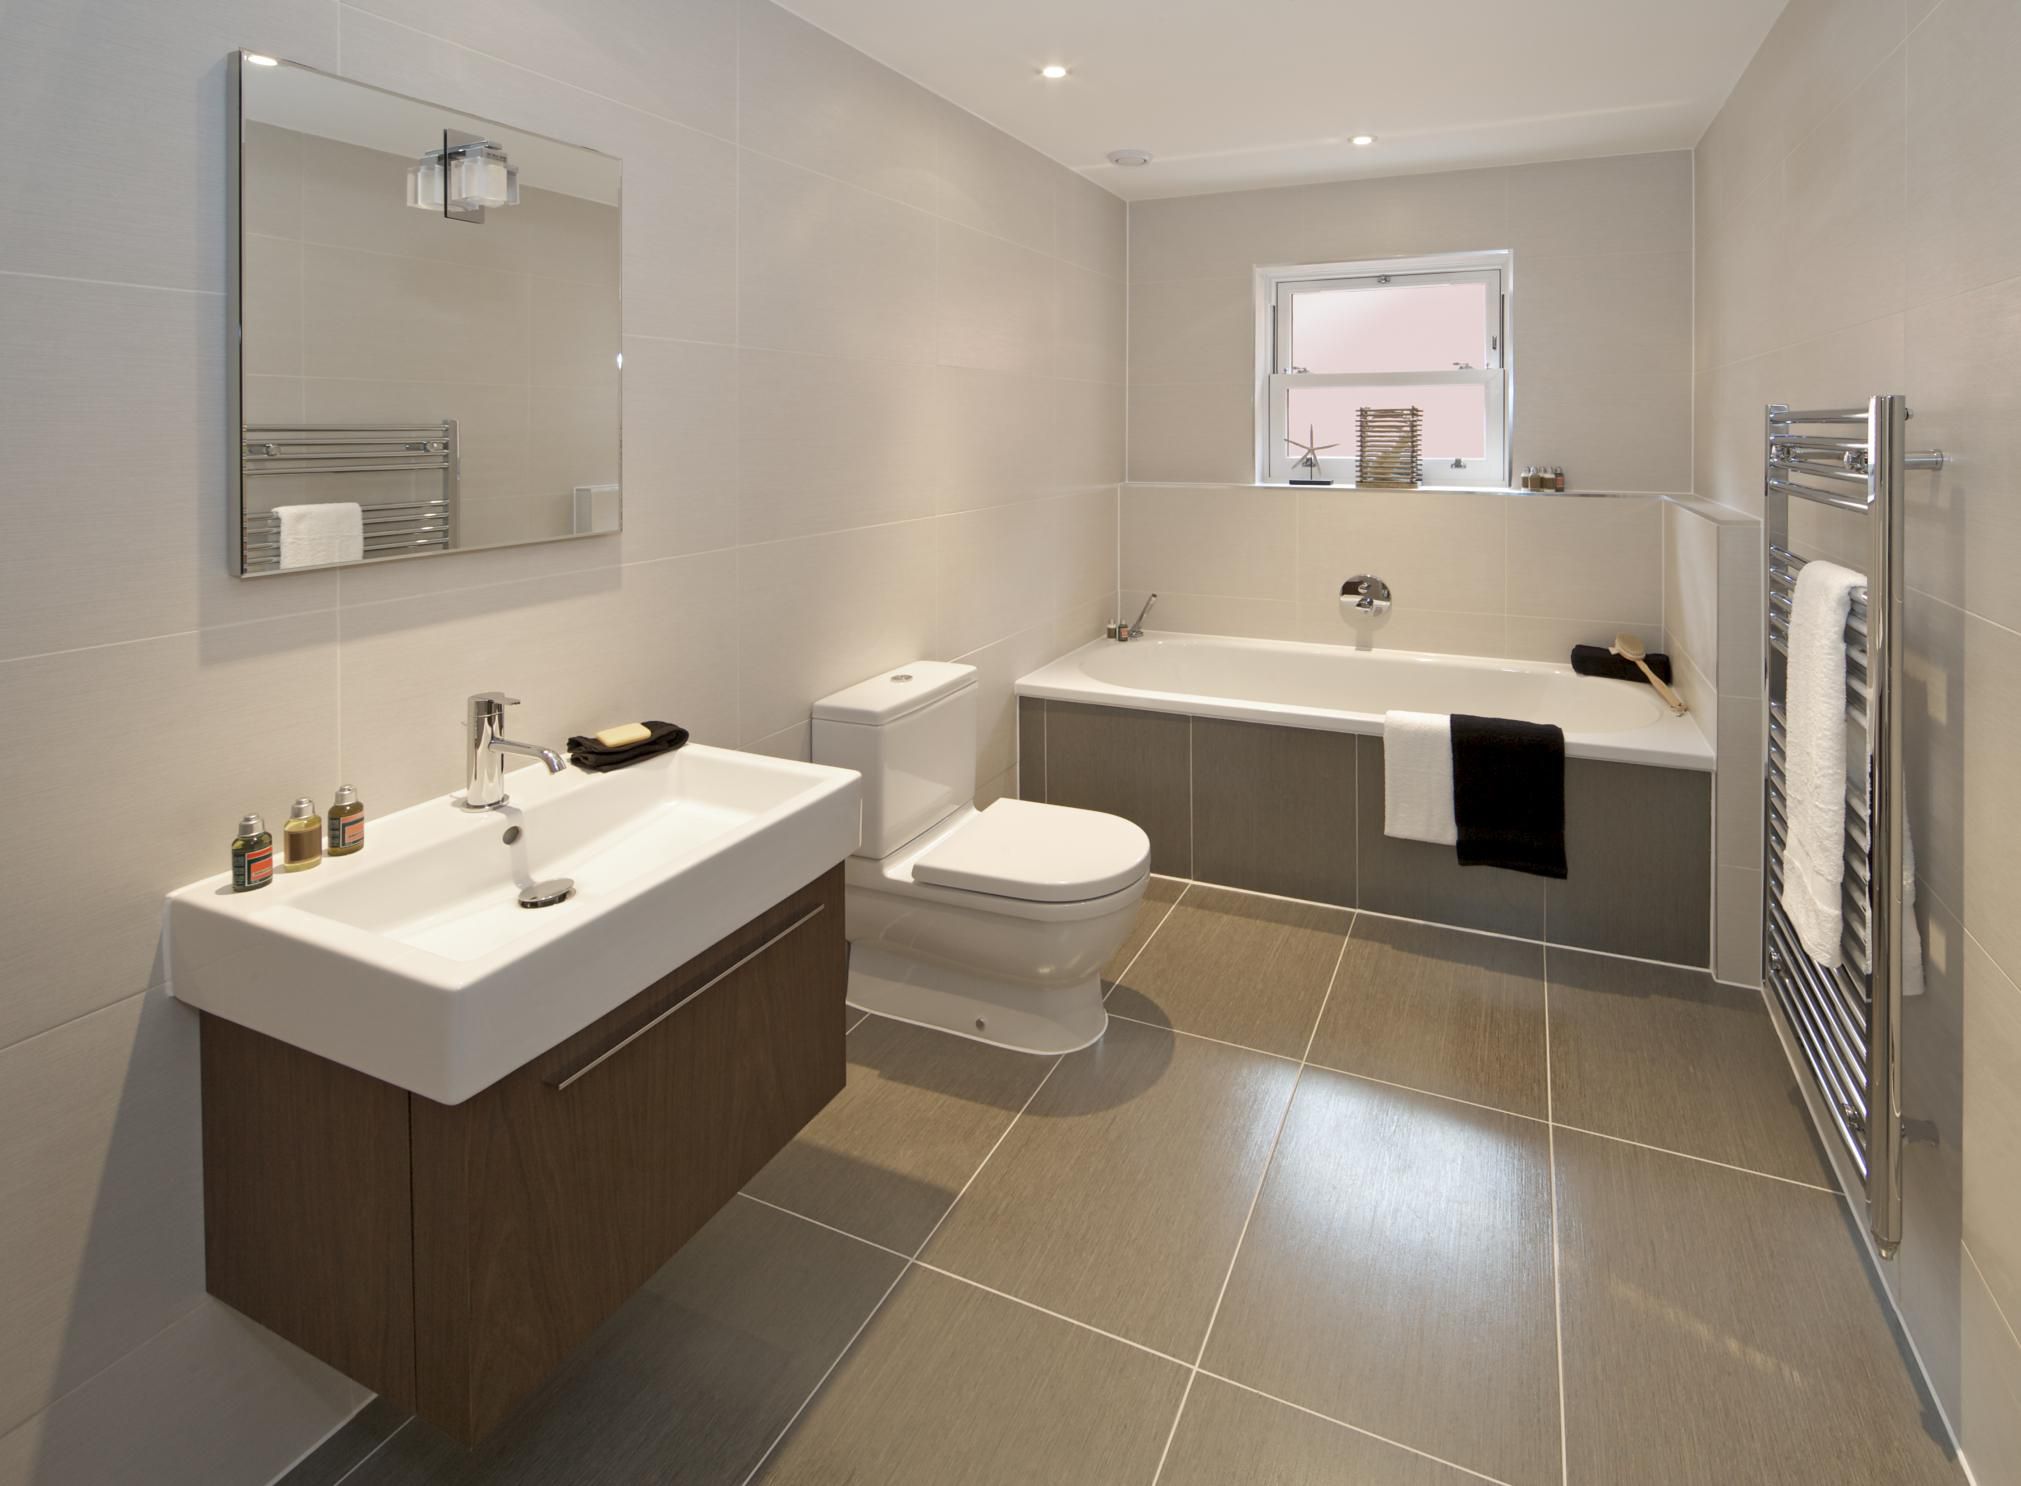 bathroom designs and tiles mallow photo - 4